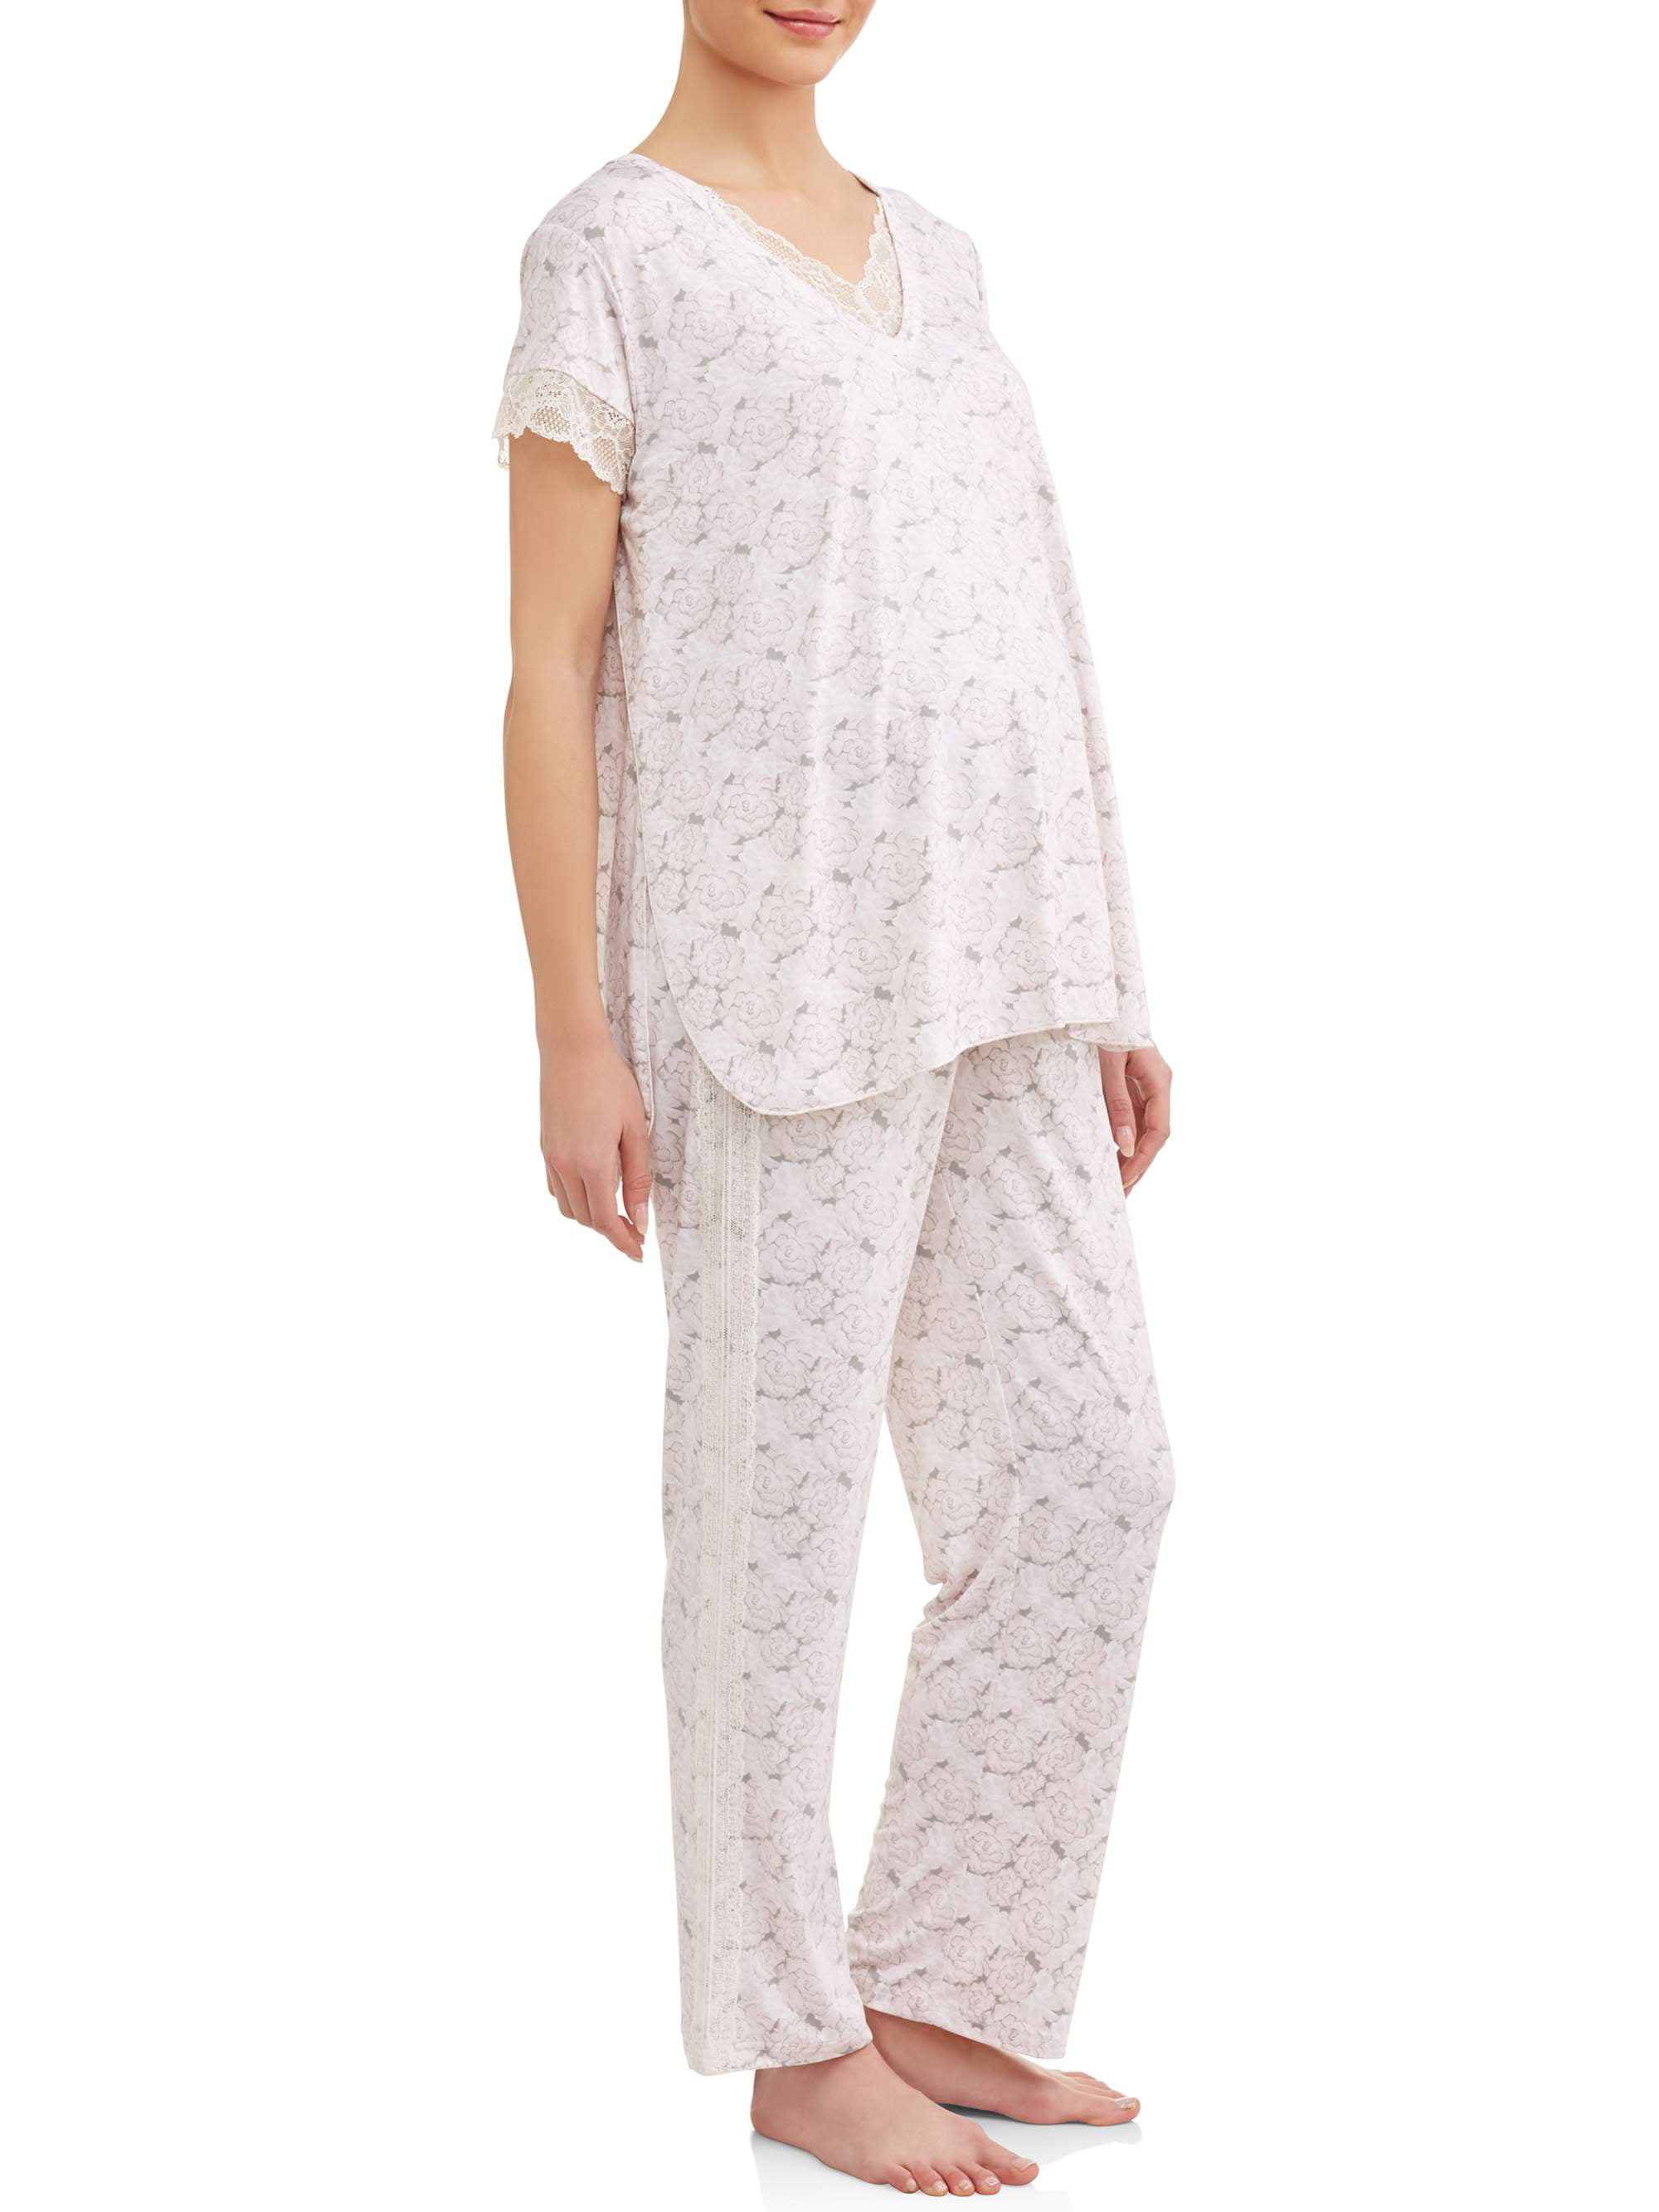 Nanette Lepore Womens/ Maternity Lace Trim Tank Top and Lounge Pants Pajama Set